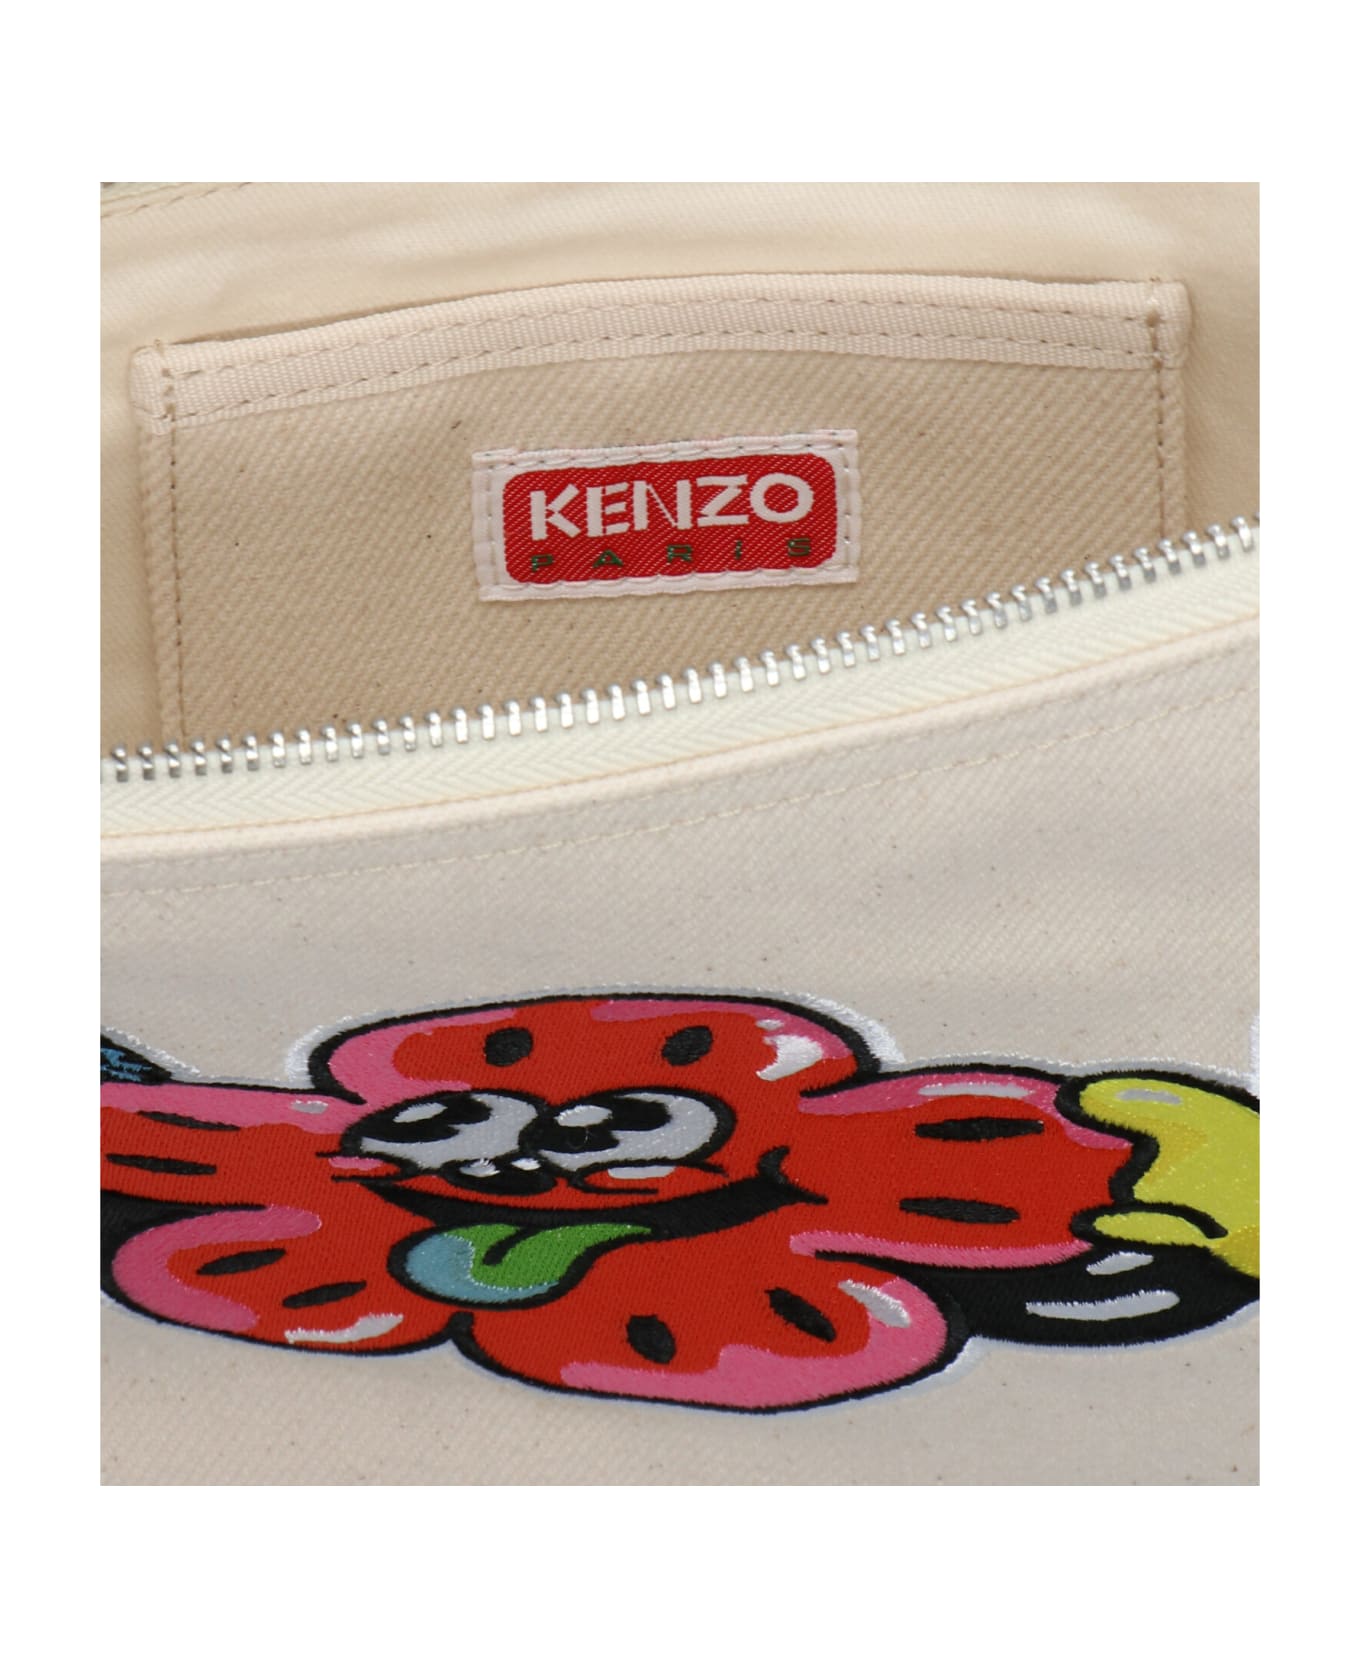 Kenzo Embroidered Clutch - Beige